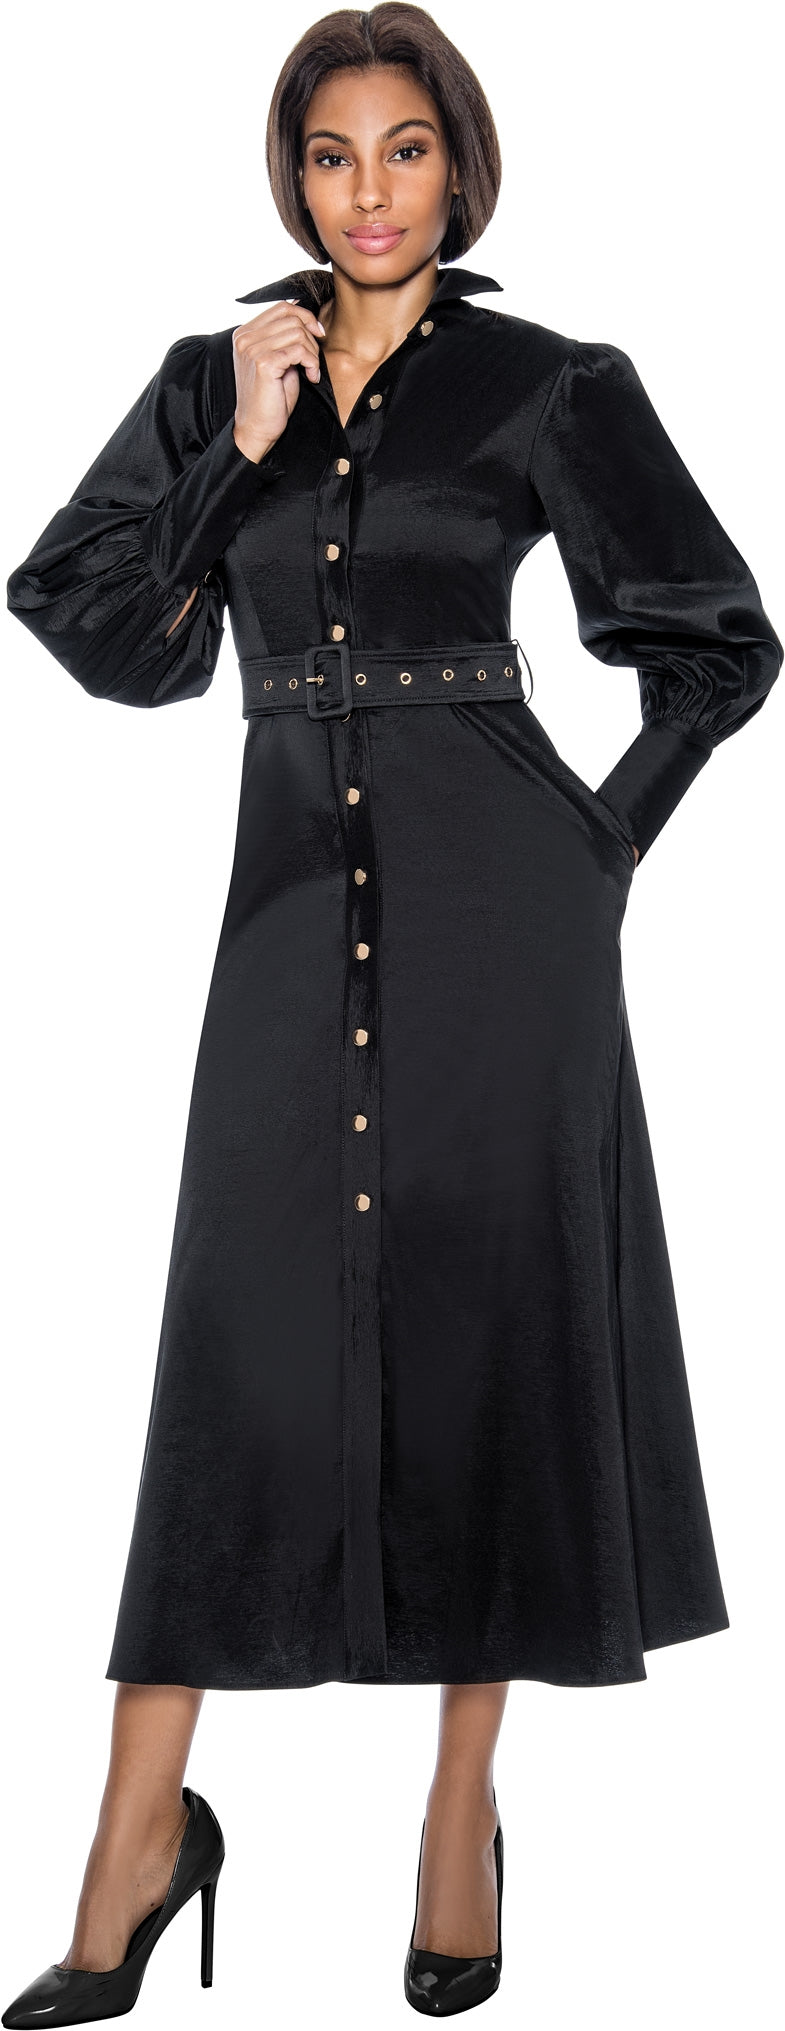 Terramina Church Dress 7055C-Black